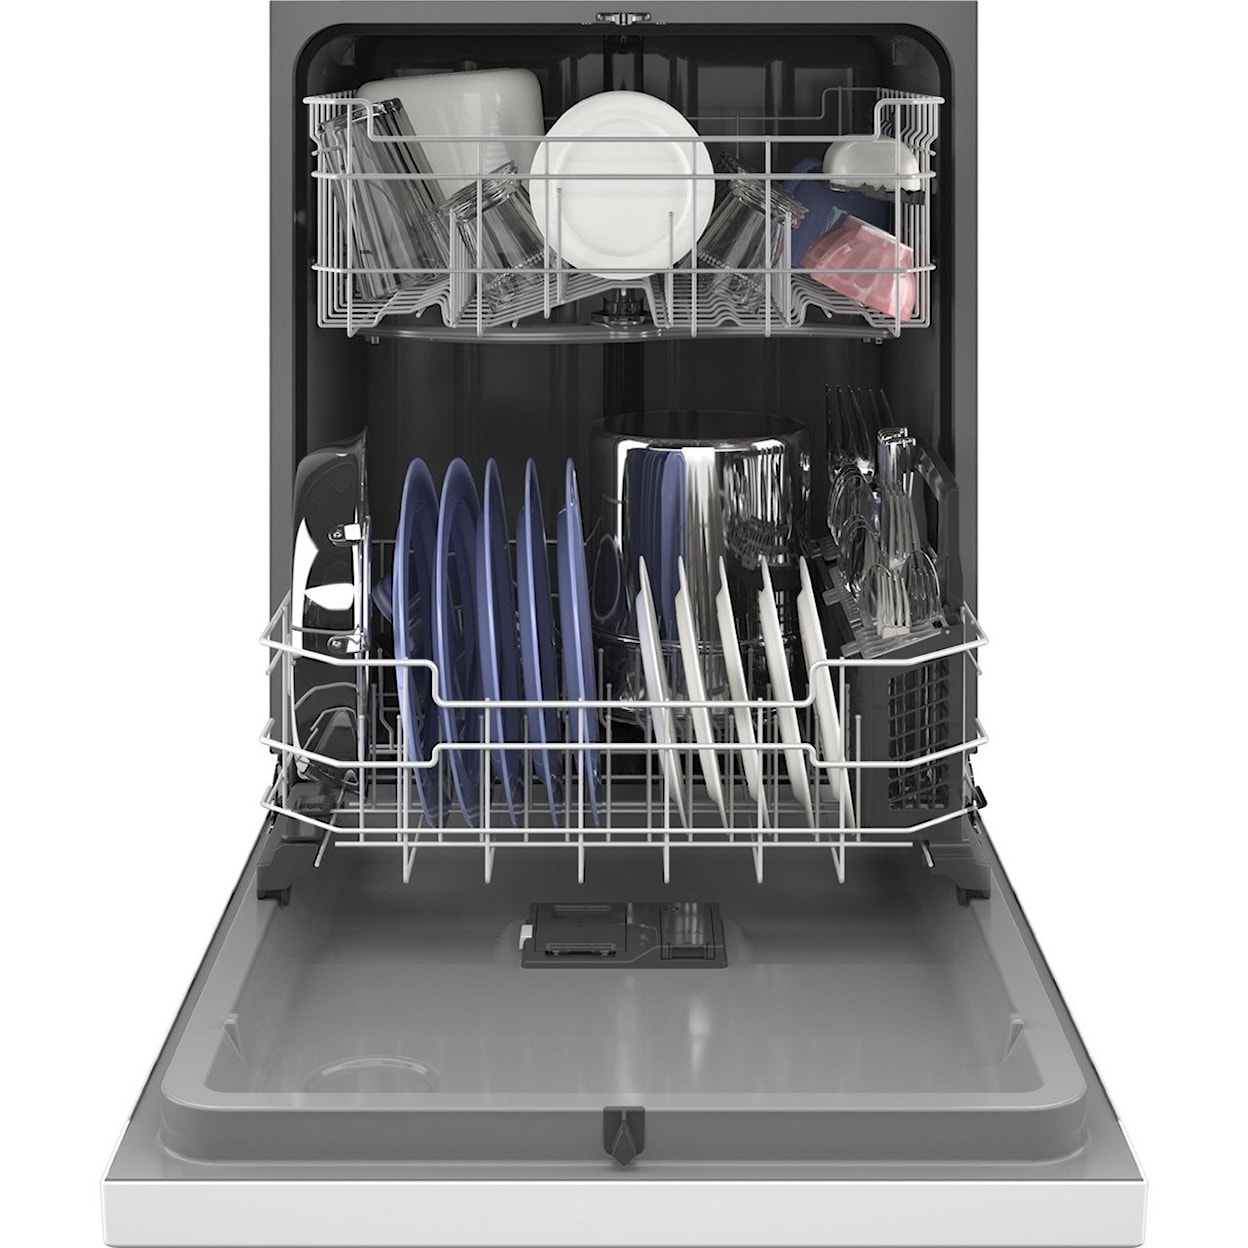 GE Appliances Dishwashers GE® Front Control Dishwasher